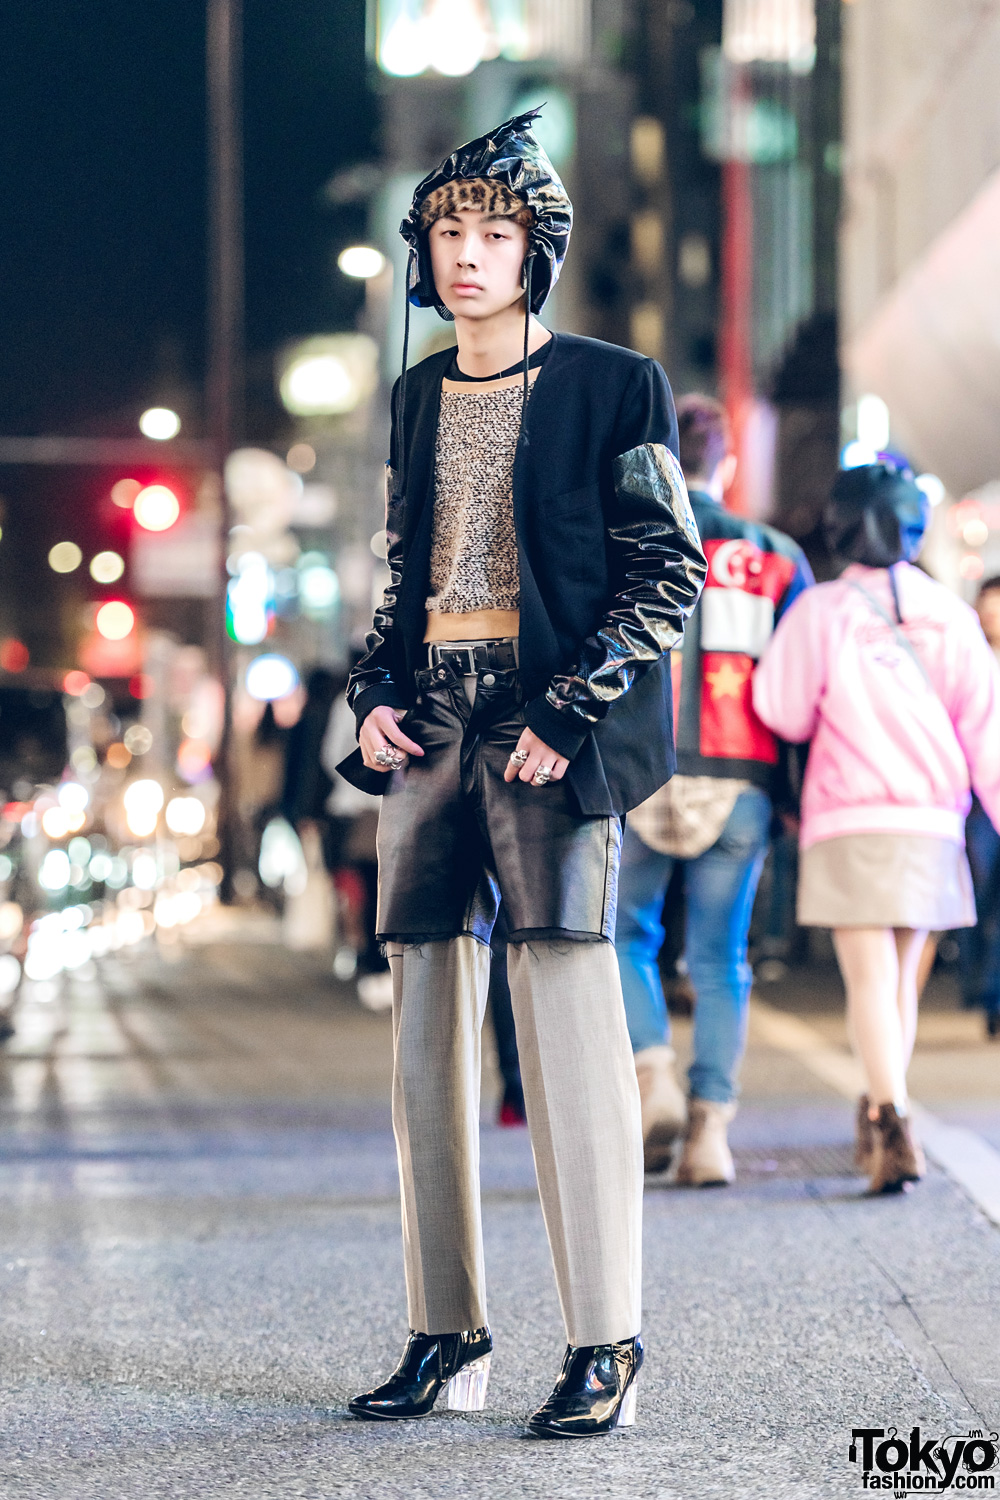 hood | Tokyo Fashion News